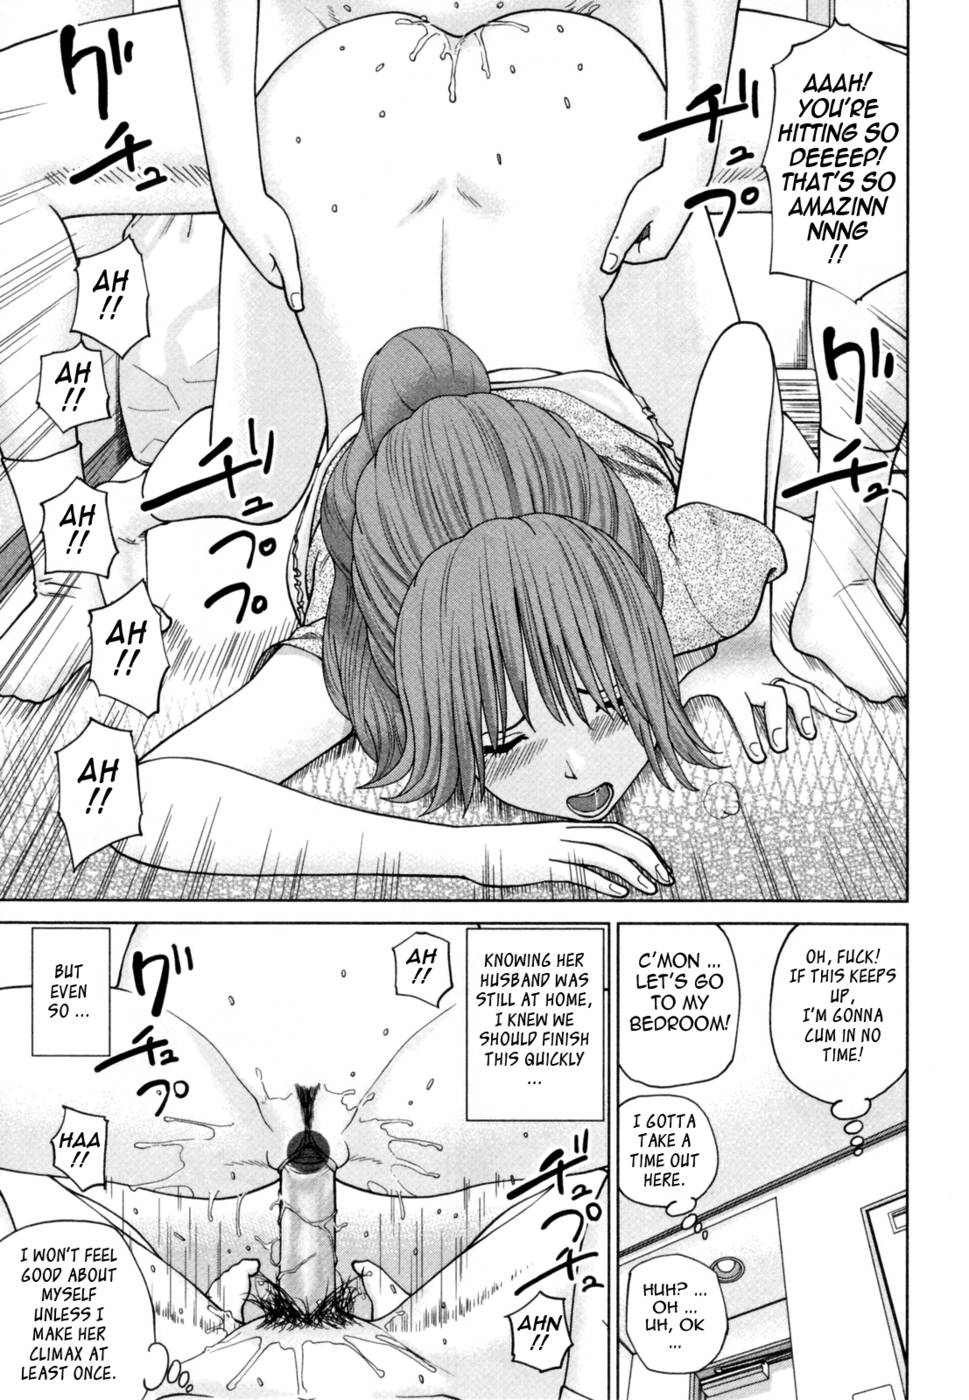 32 Year Old Unsatisfied Wife-Chapter 10-The Wife Next Door-Hentai Manga Hentai Comic